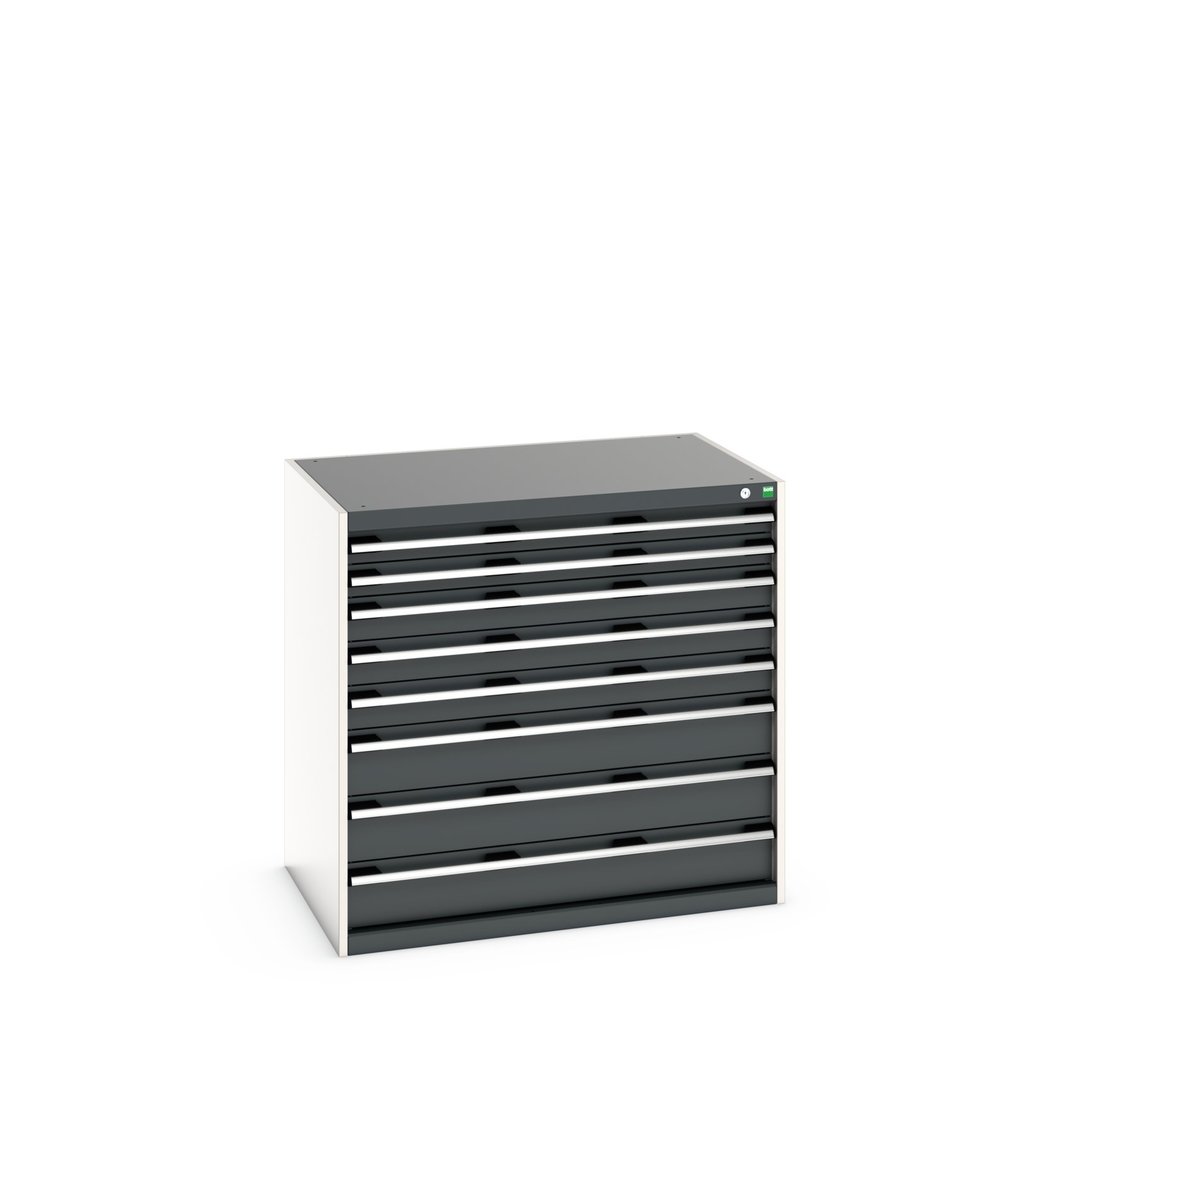 40029026. - cubio drawer cabinet